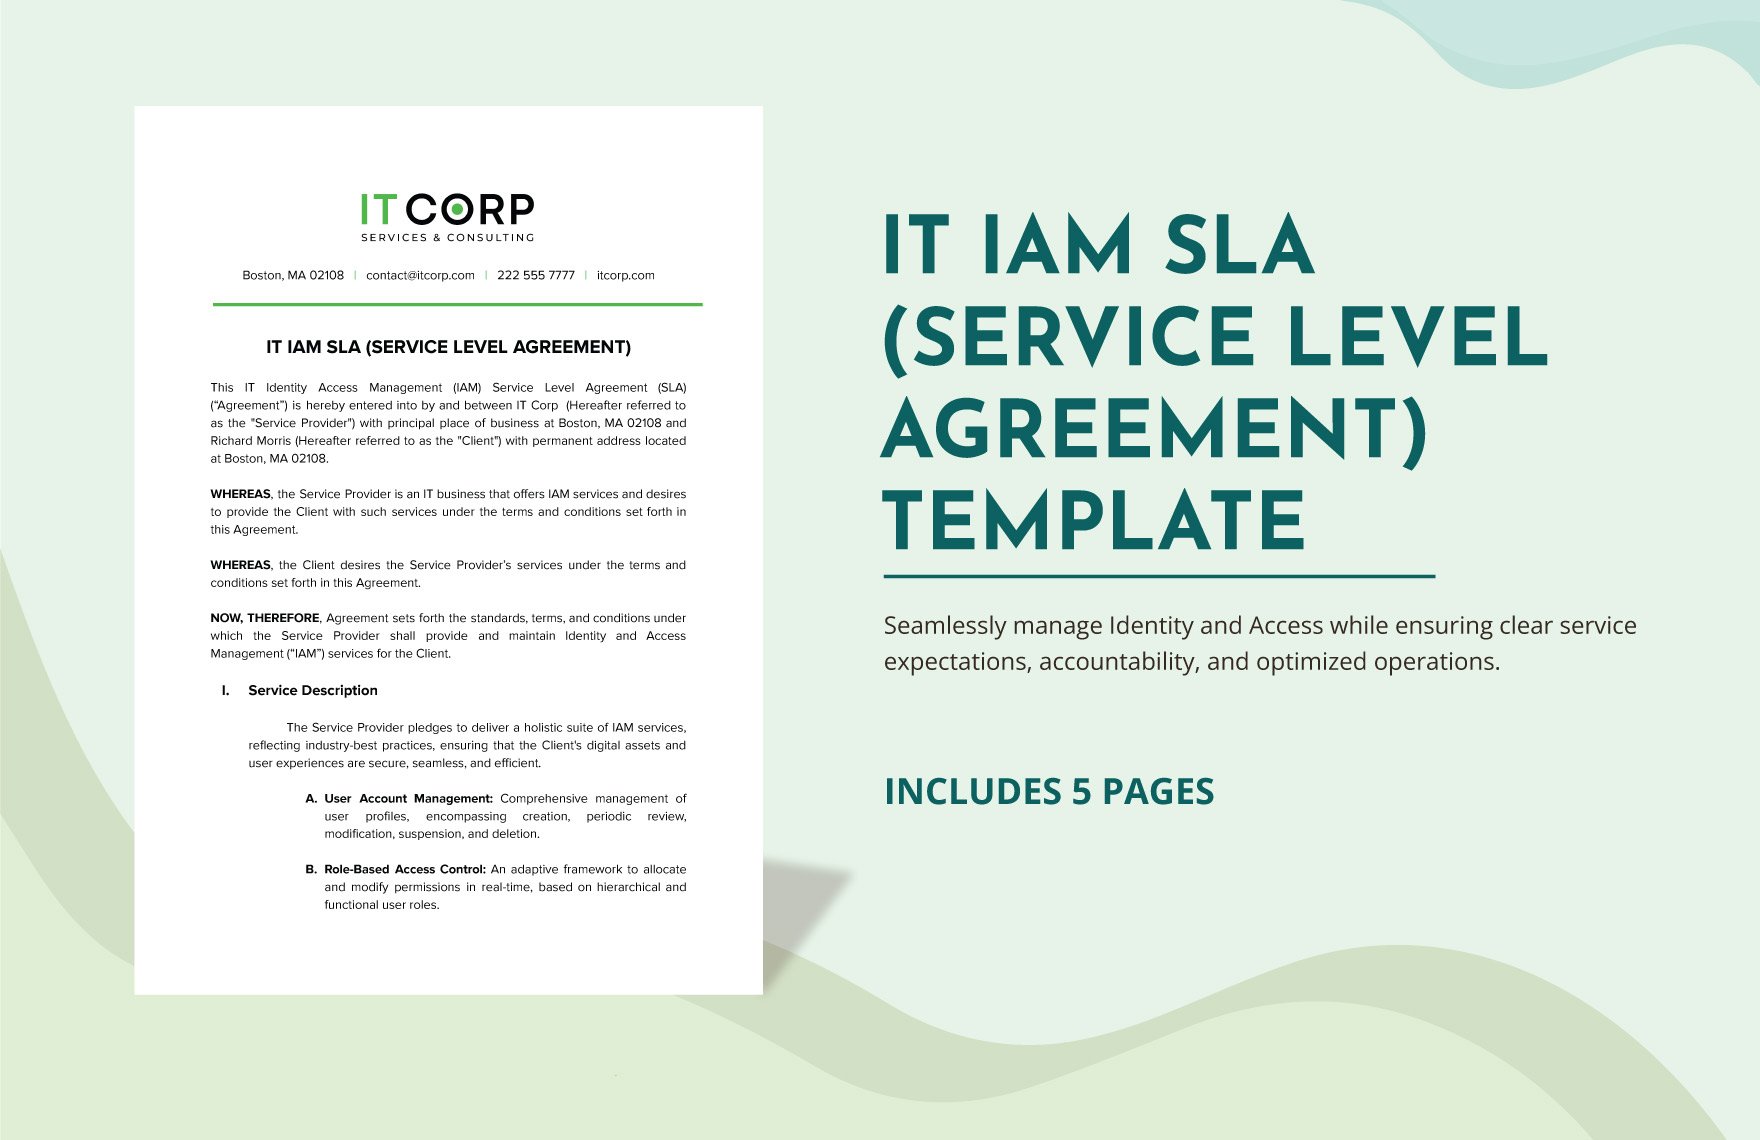 IT IAM SLA (Service Level Agreement) Template